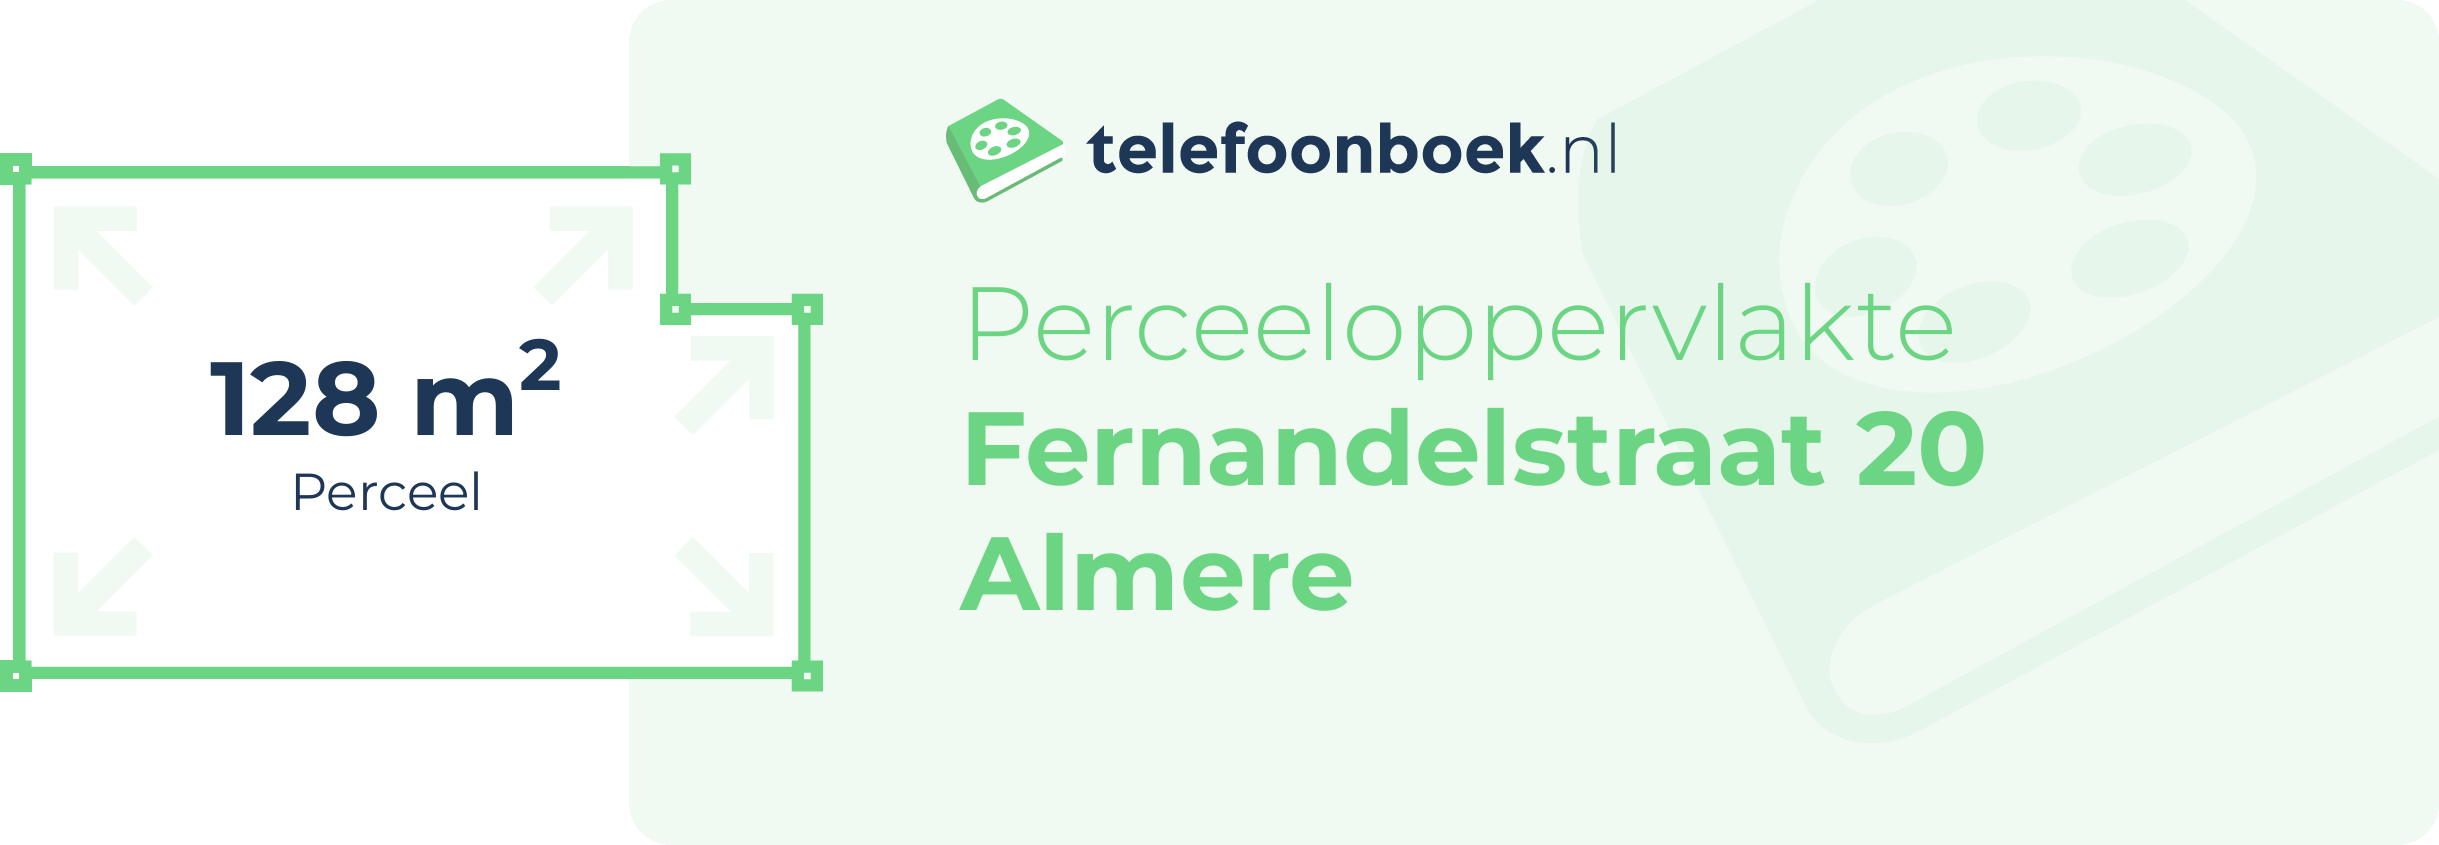 Perceeloppervlakte Fernandelstraat 20 Almere